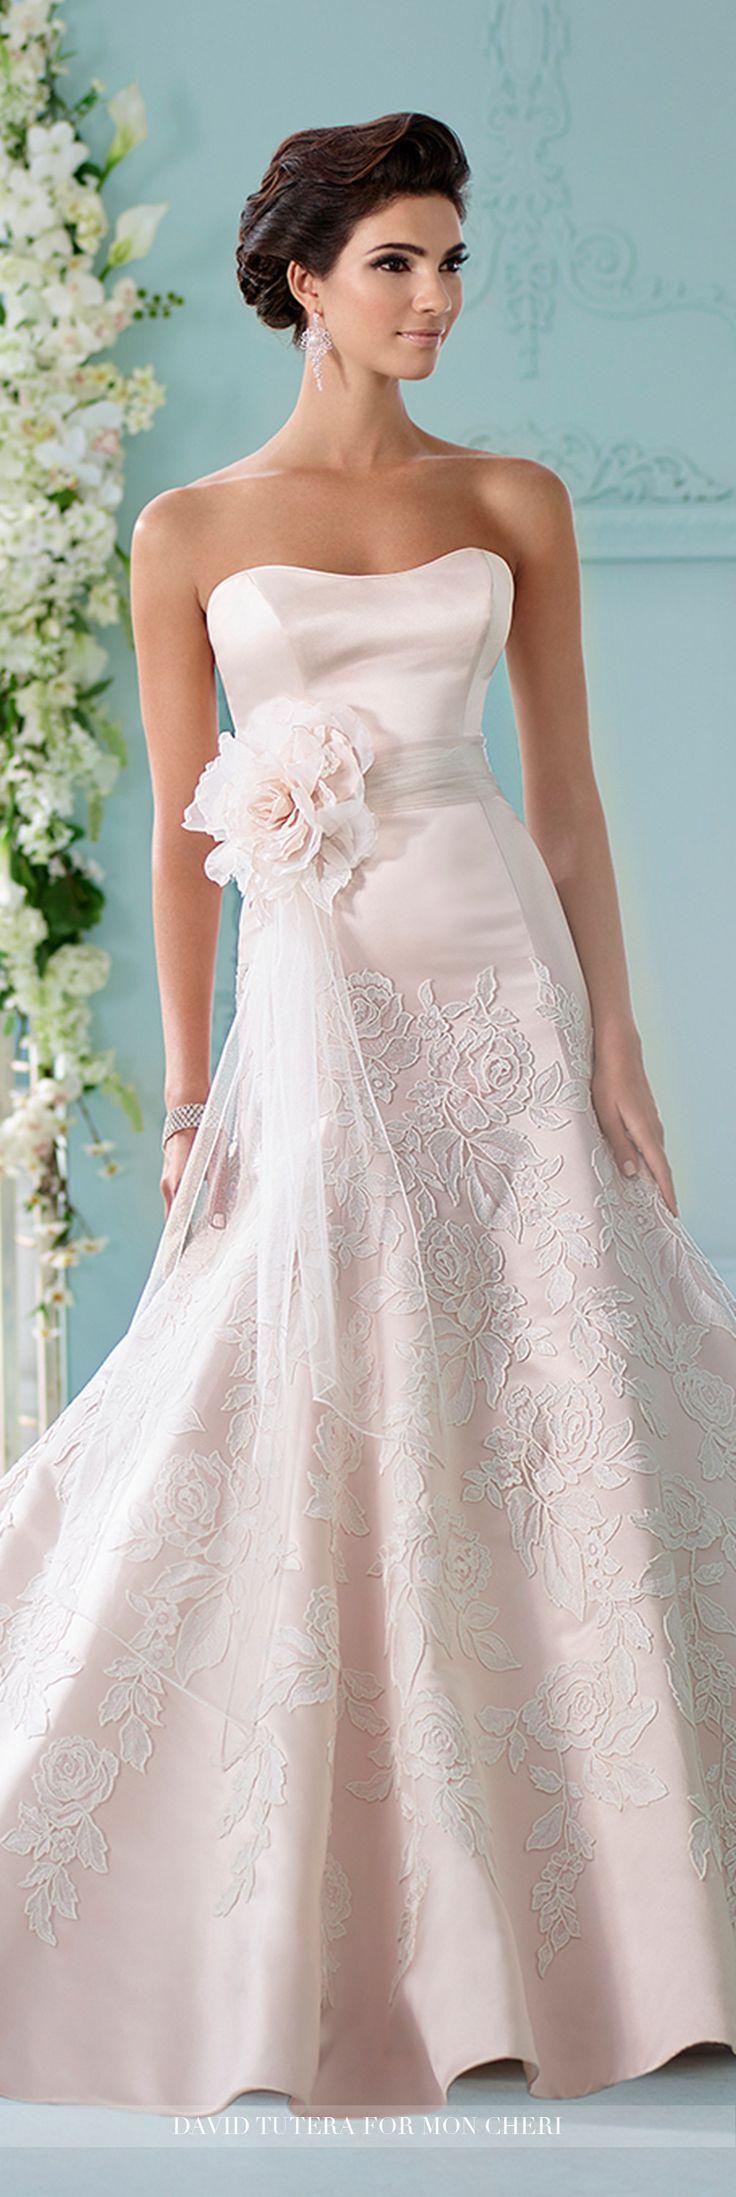 Wedding - Strapless Satin Fit And Flare Wedding Dress David Tutera